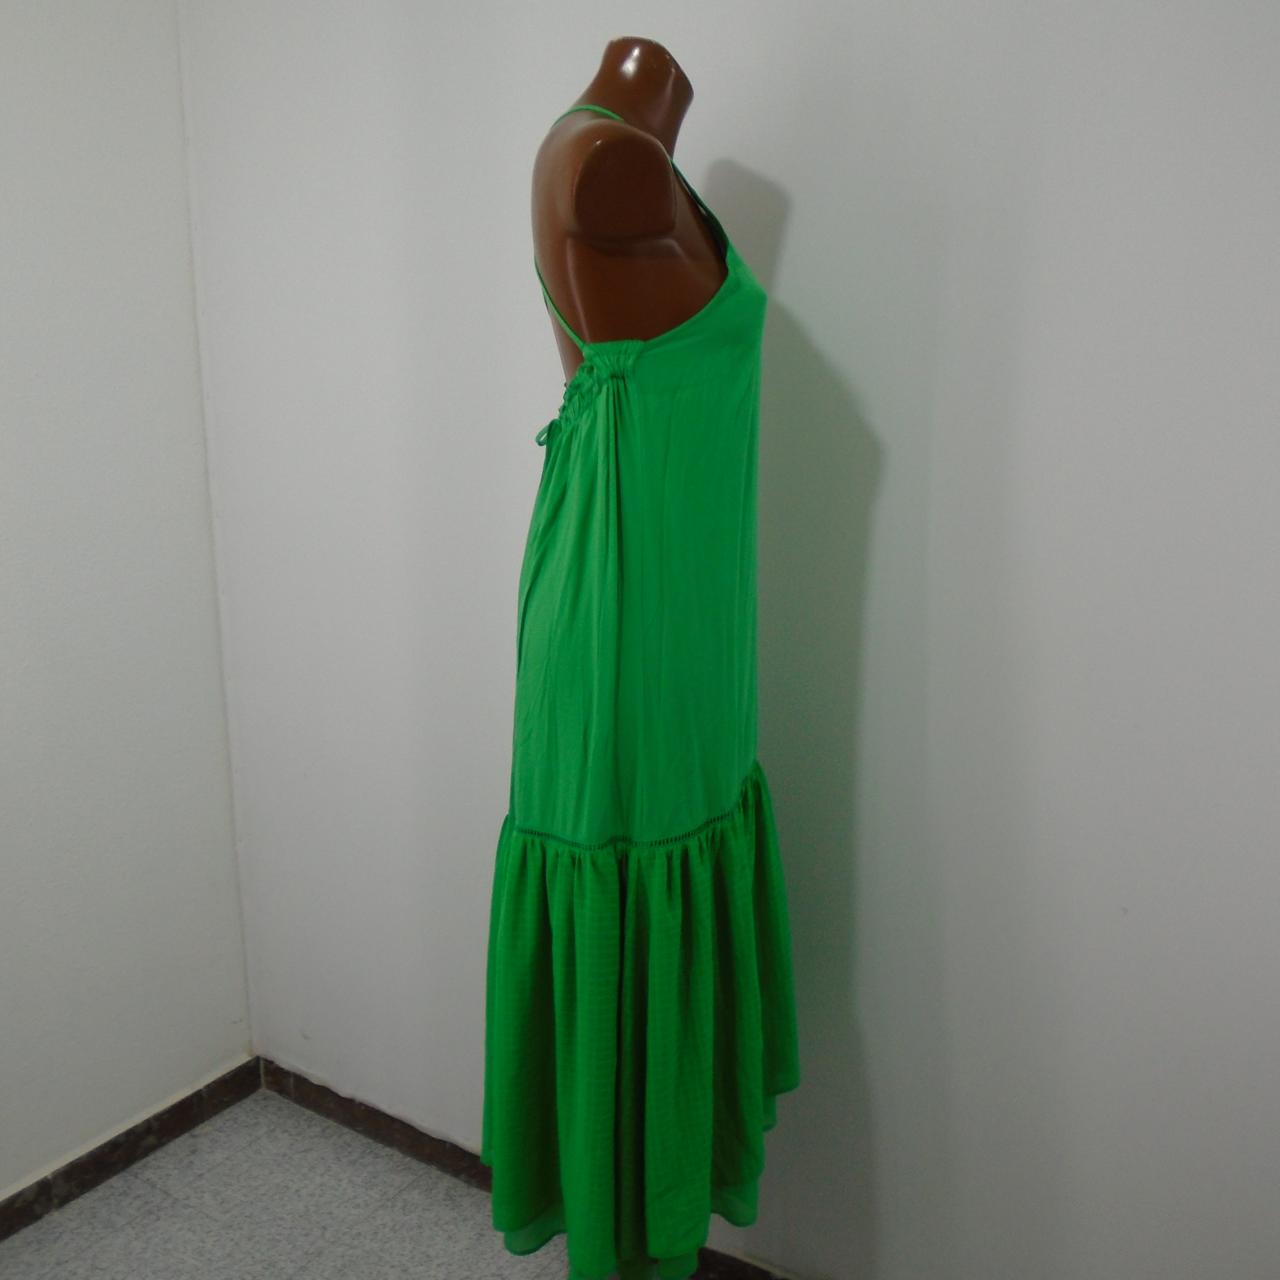 Vestido de mujer Reserveid. Verde. S. Usado. Muy bien